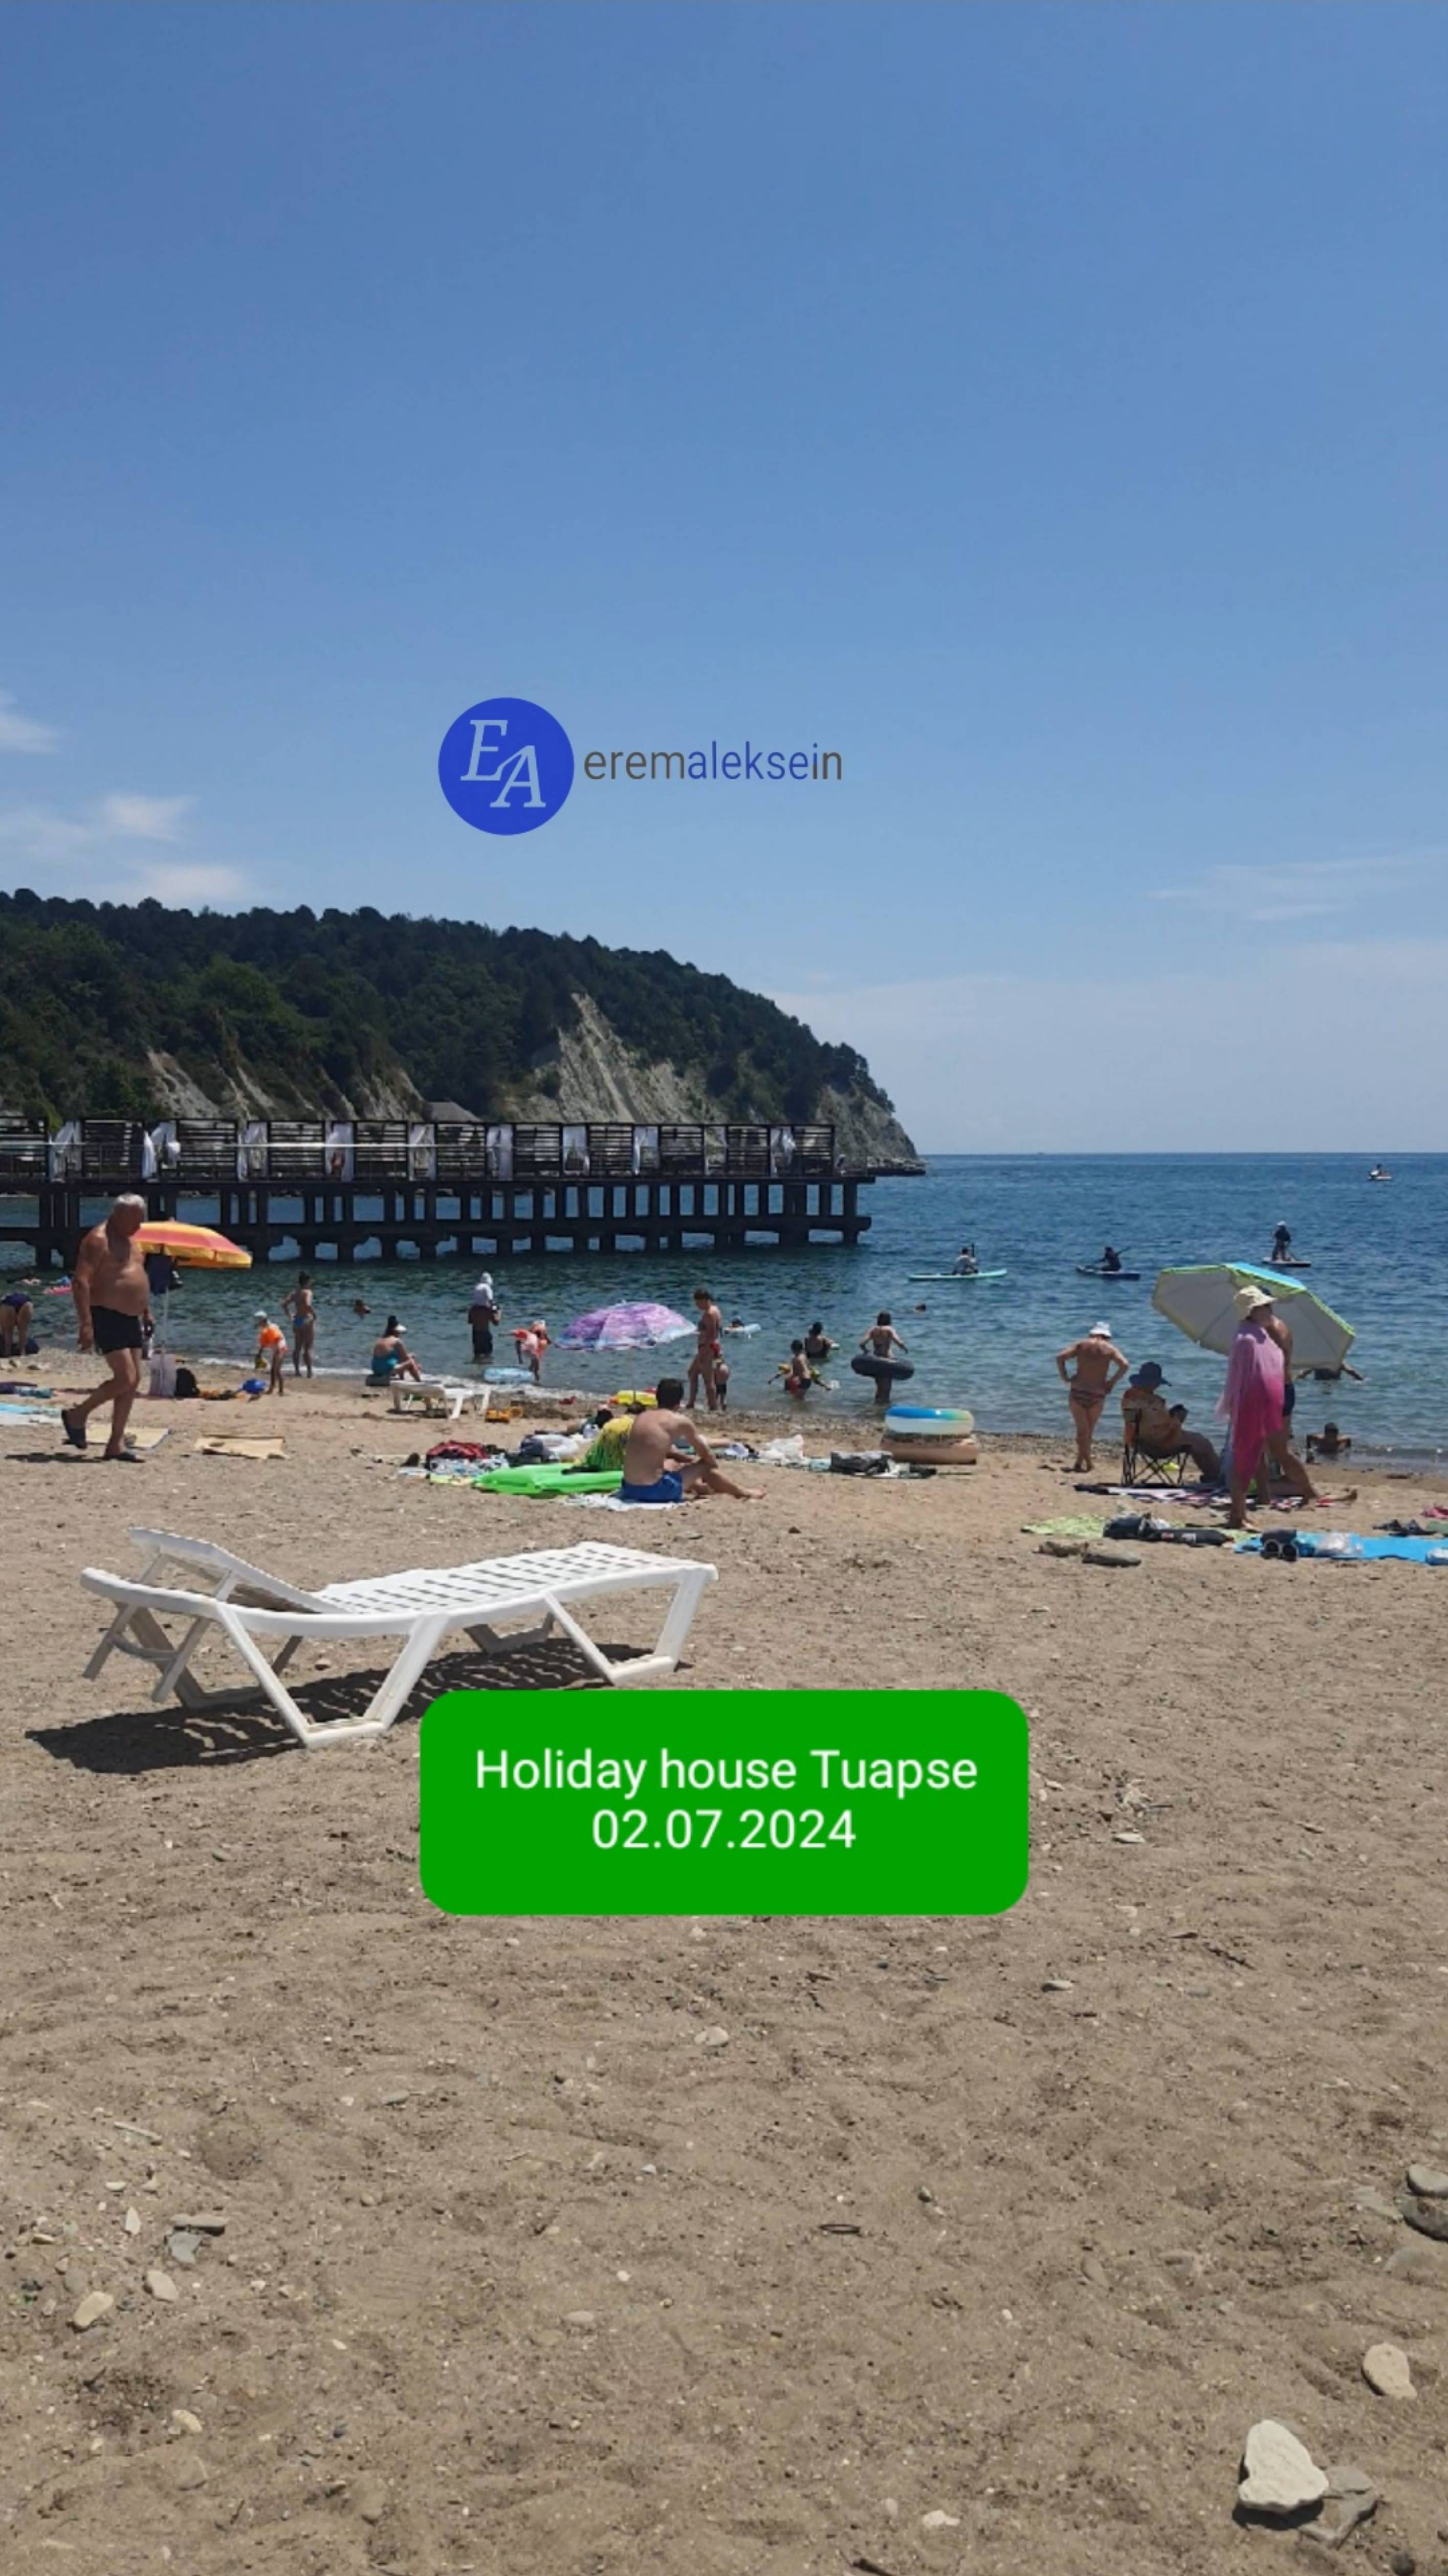 Holiday house Tuapse / Clip
(Дом отдыха Туапсе / Ролик)
#russia #bzhid #bluebay #beach